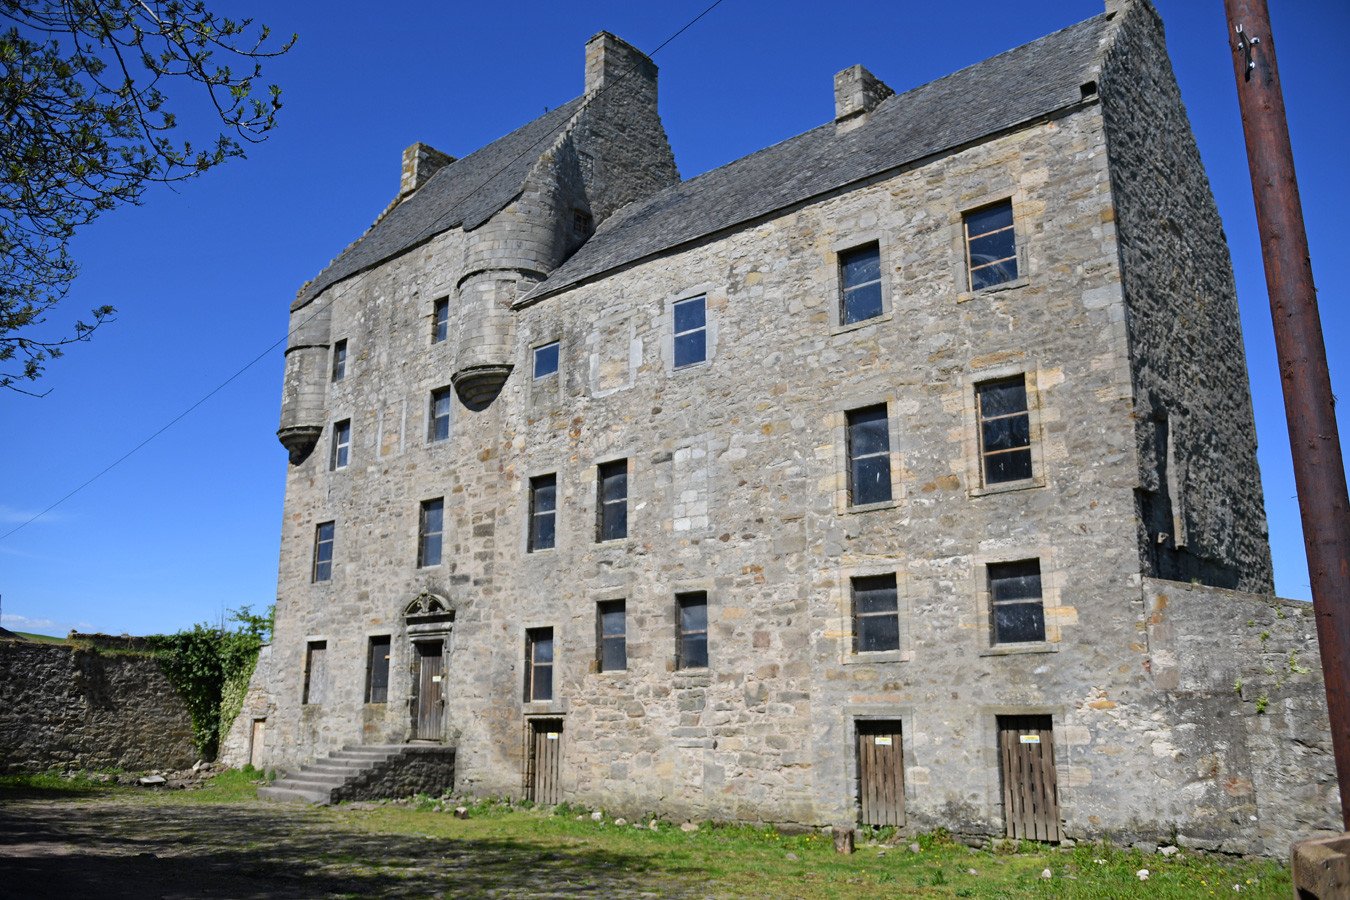 Lallybroch - a.k.a Midhope Castle - an Outlander filming location in Scotland